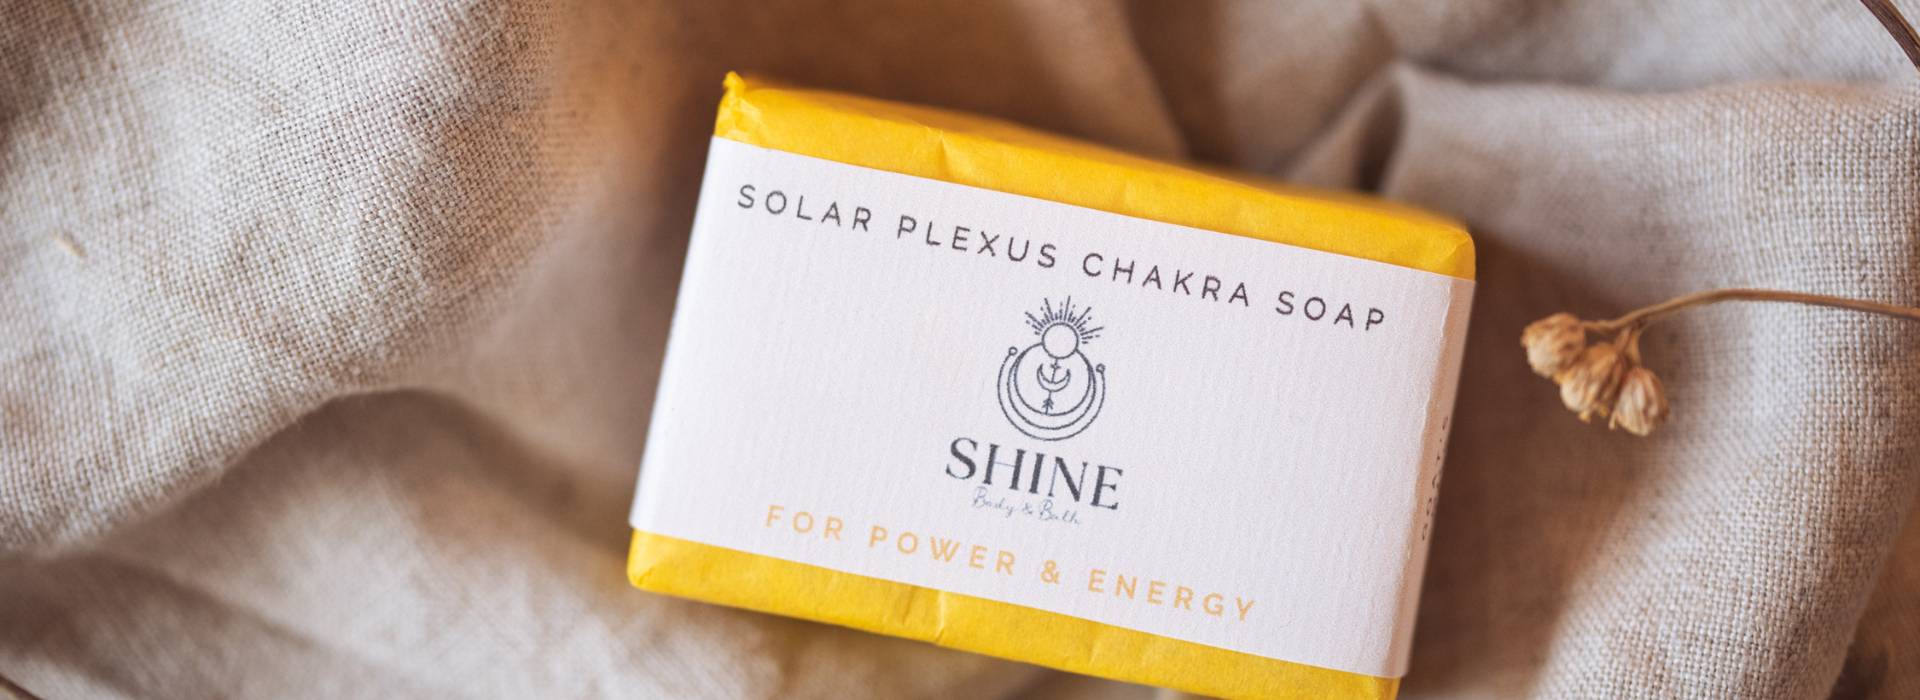 Solar Plexus Chakra Soap, wrapped on linen | Homepage banner | Shine Body & Bath